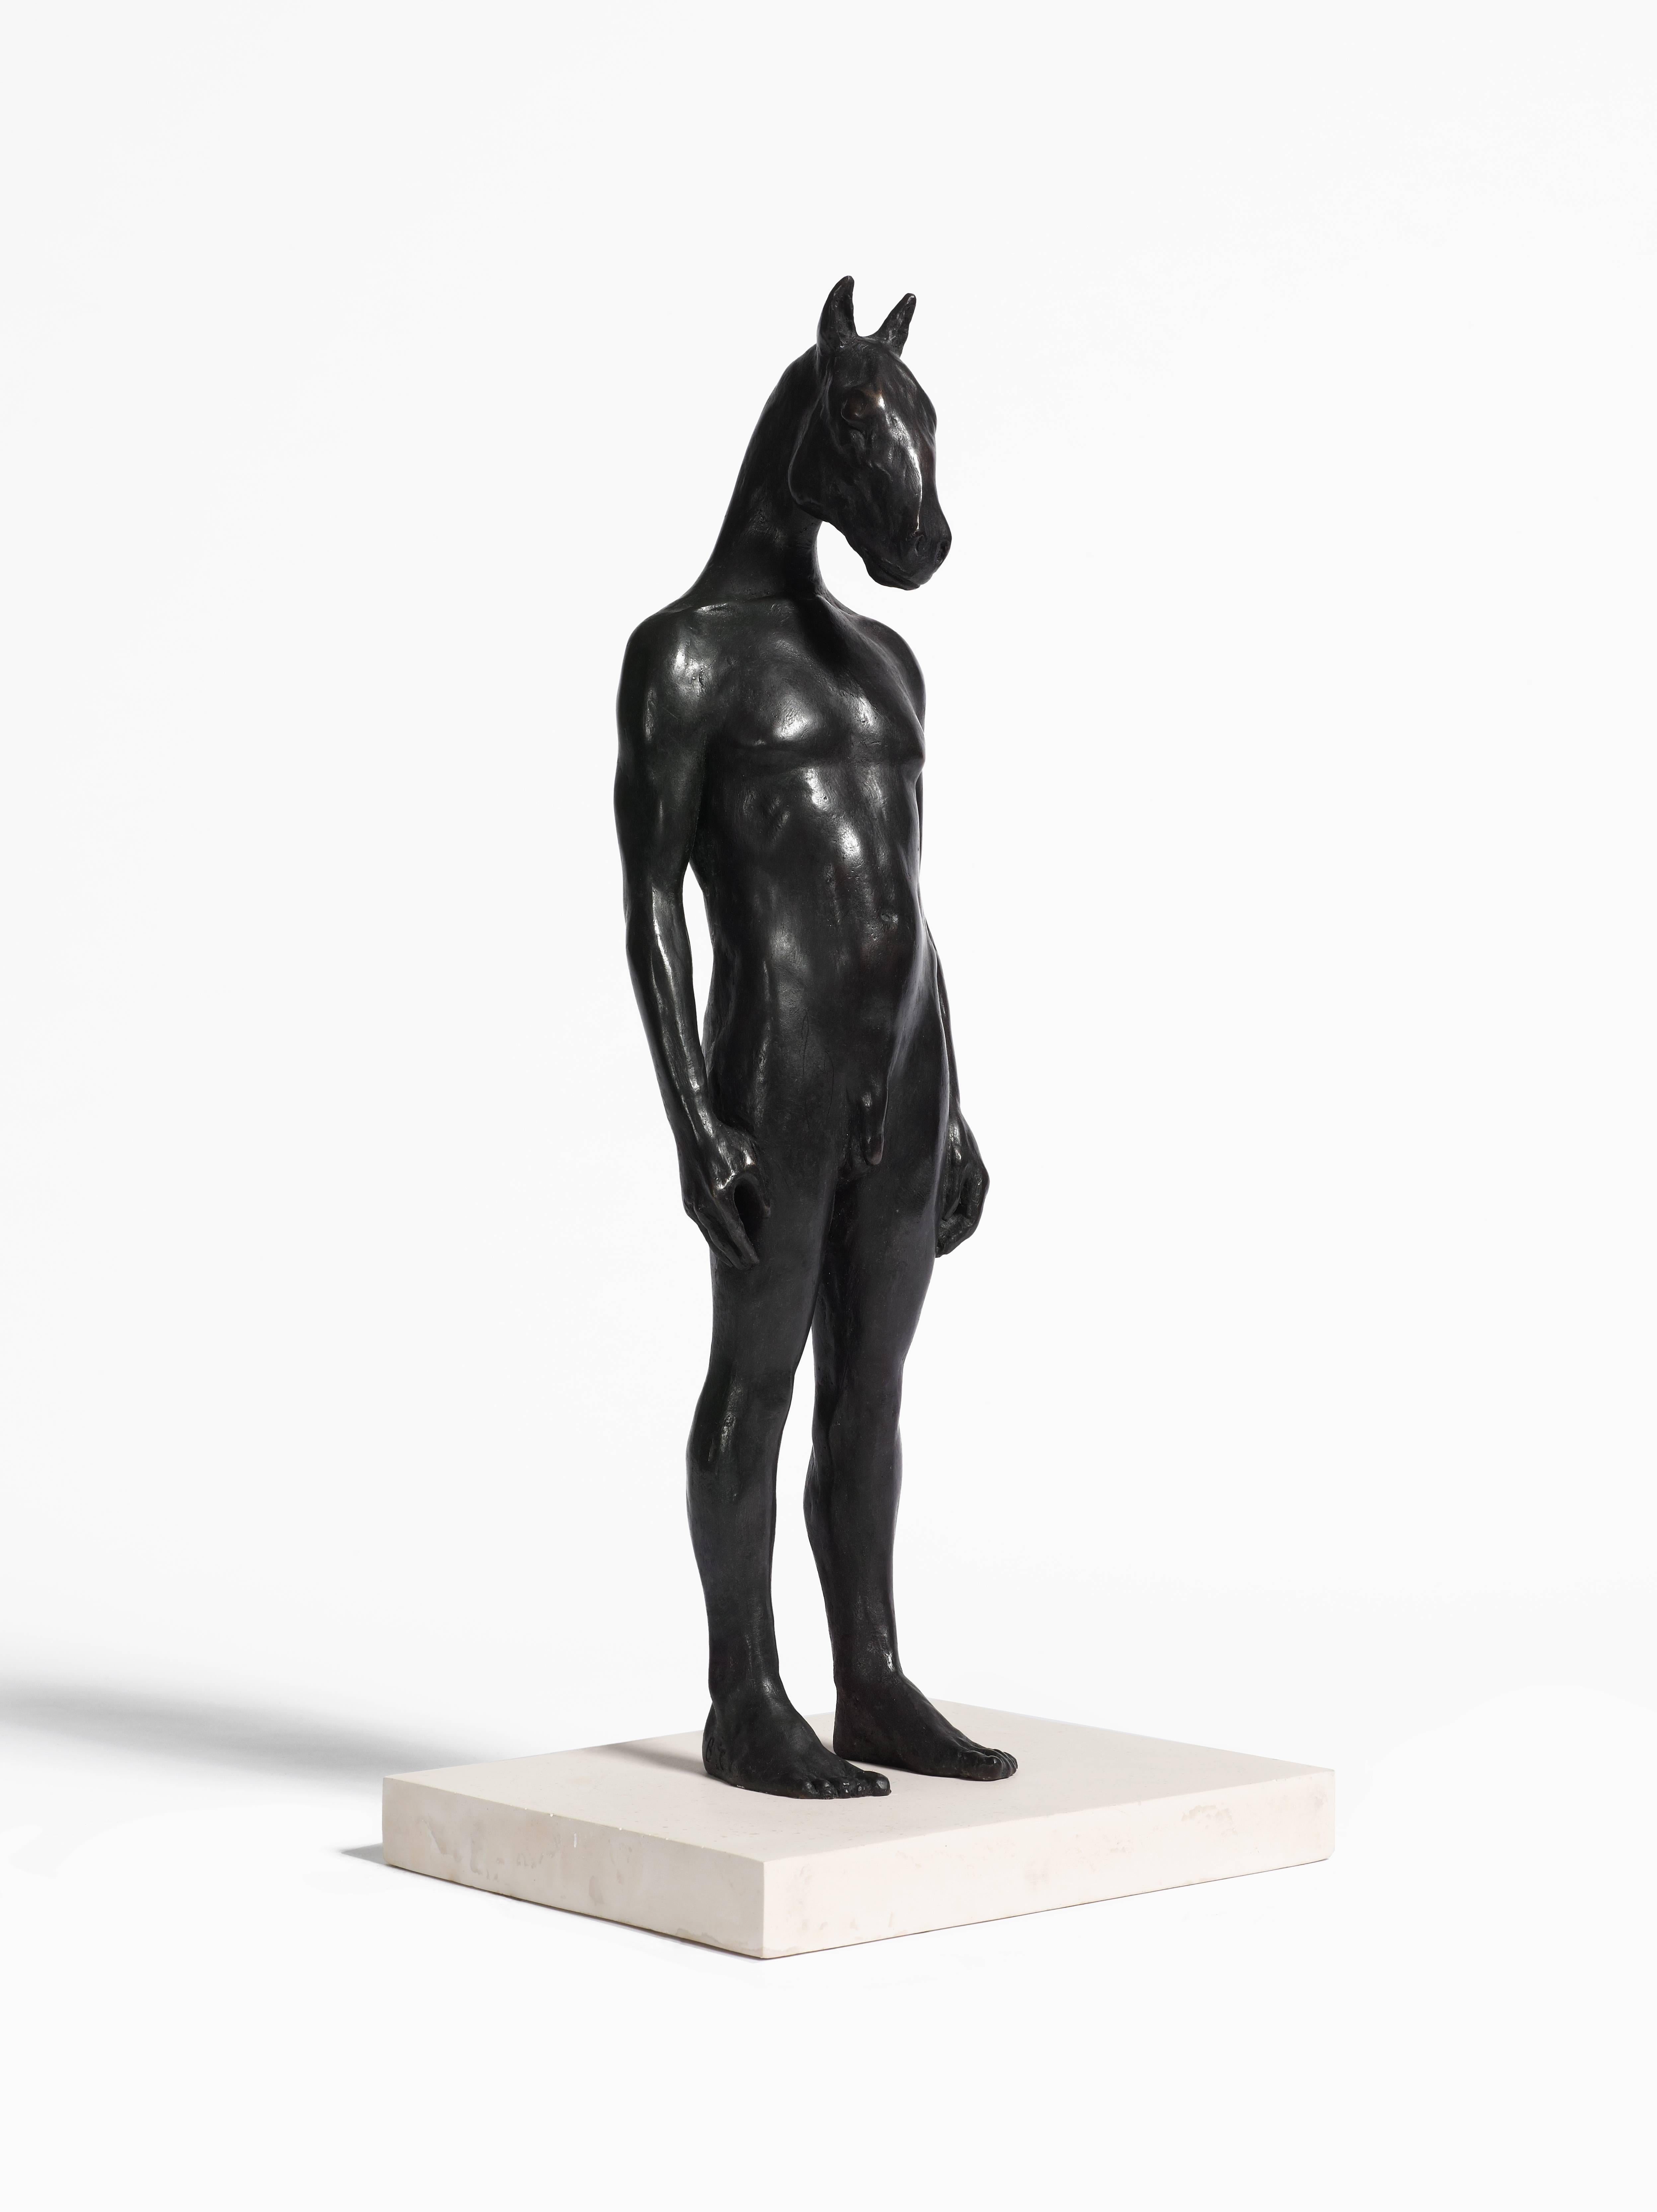 Standing Horse - Sculpture by Beth Carter